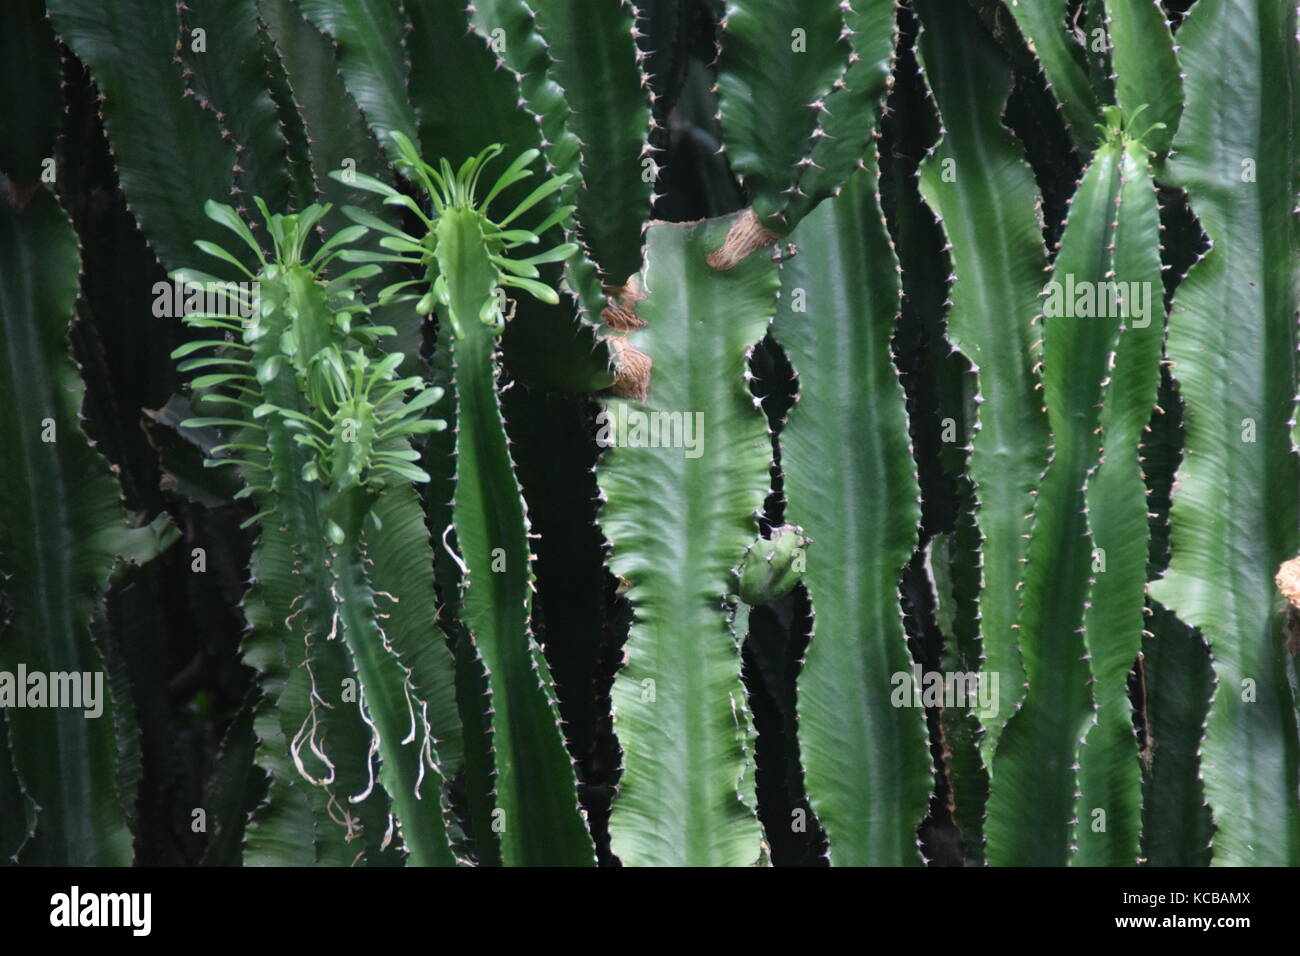 CACTUS TROPICALES  close up - cactus tropicals no spikes Stock Photo